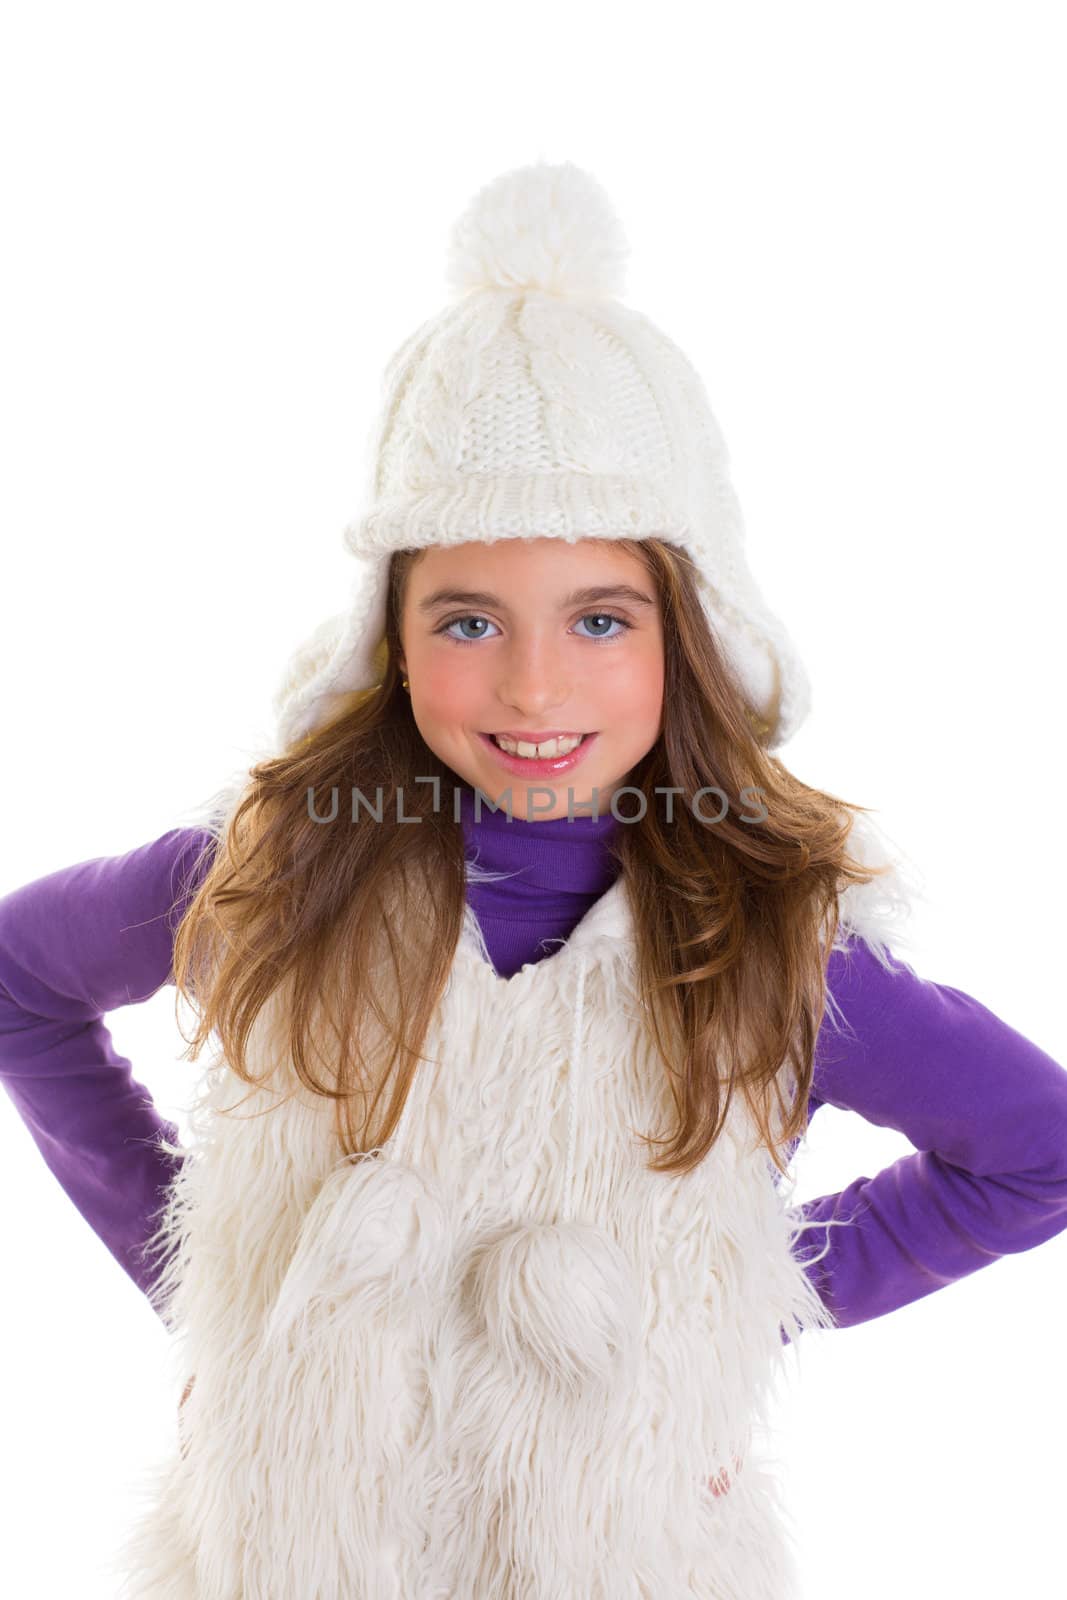 blue eyes happy child kid girl with white winter cap by lunamarina